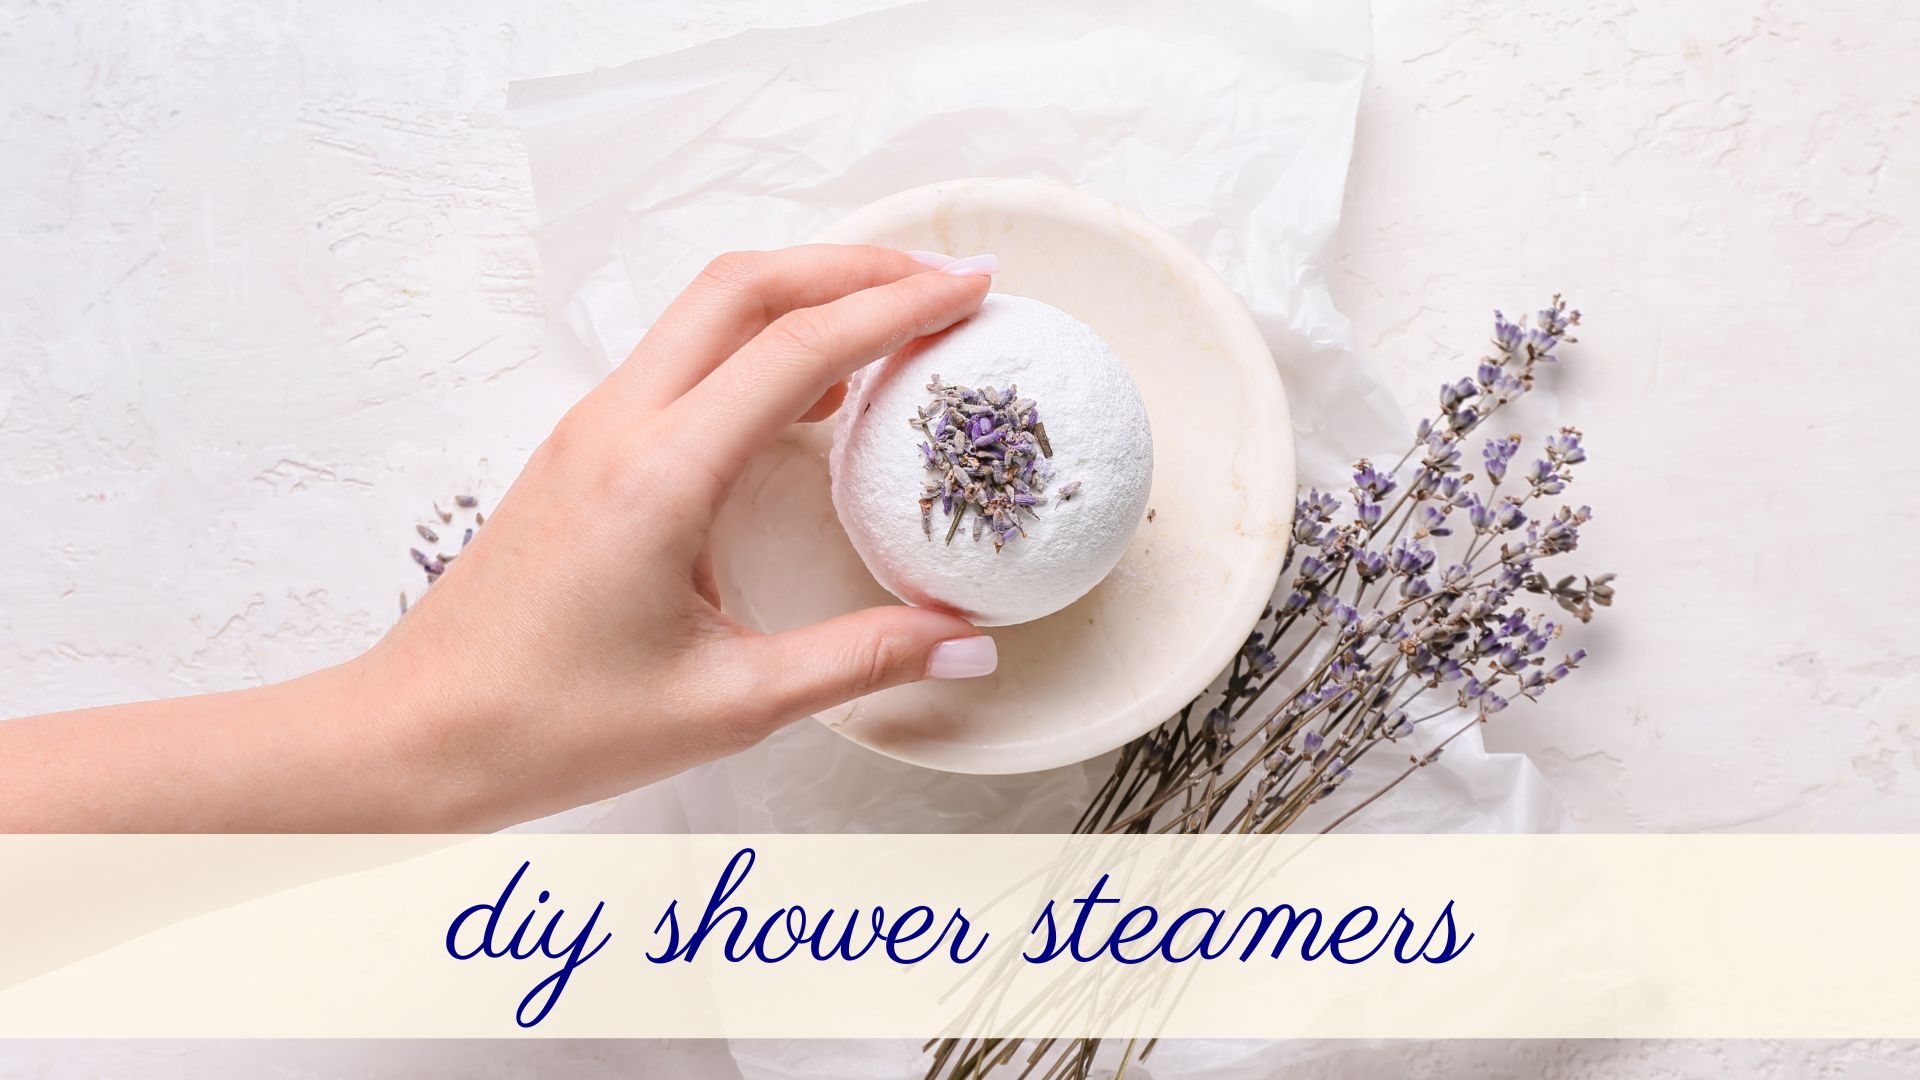 diy shower steamers - 305 Hive